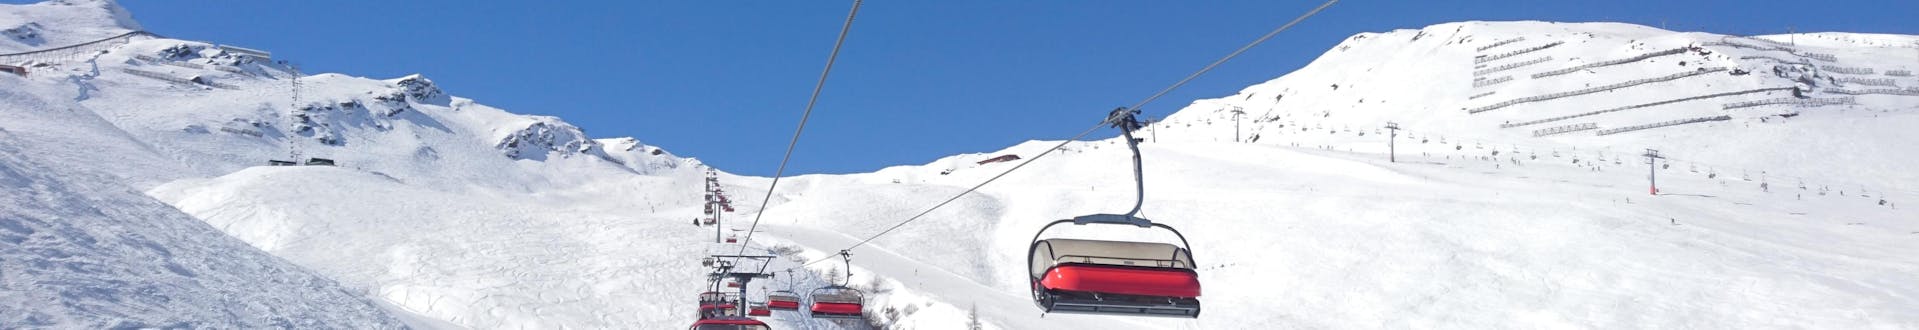 Ski lift on the slopes of Götzens - Muttereralm, where you can book ski lessons.